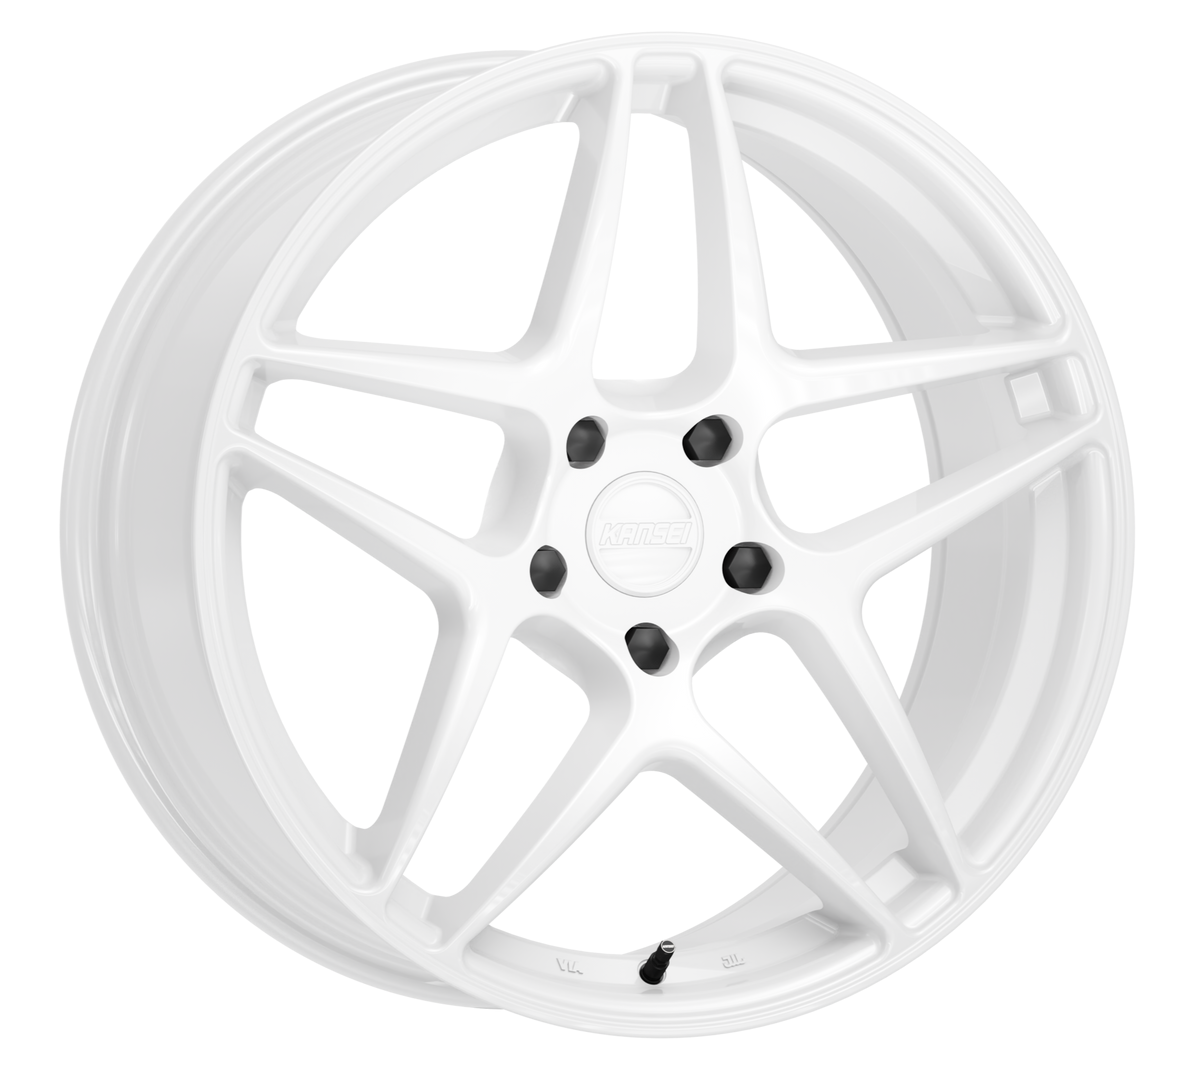 K15W ASTRO Wheel, Size: 19" x 10.50", Bolt Pattern: 5 x 114.300 mm, Backspace: 6.22" [Finish: Gloss White]